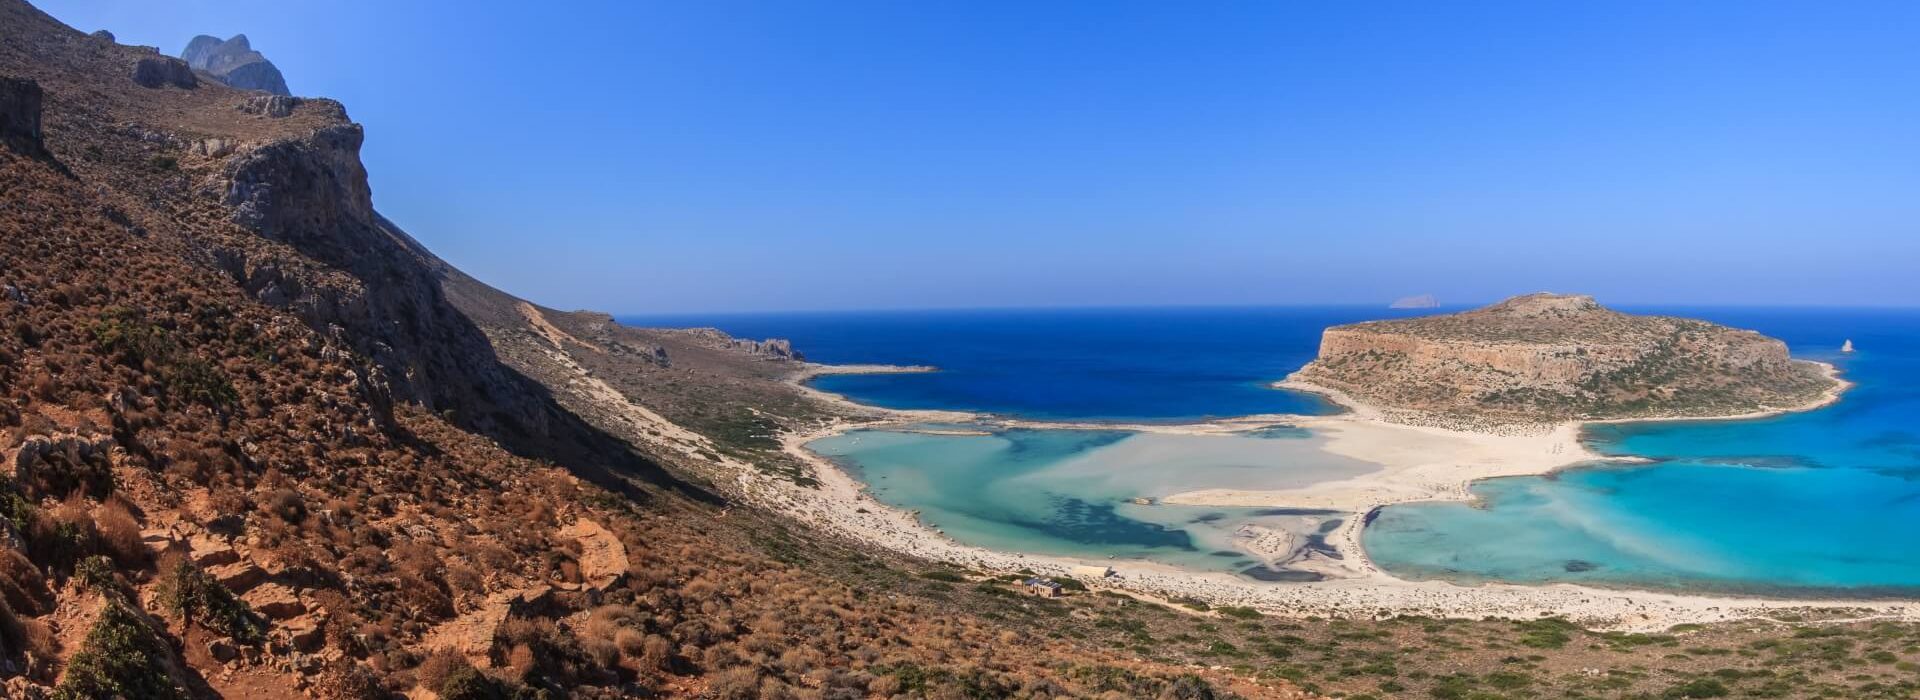 balos-lagoon-and-gramvousa-island-in-hania-crete-2021-08-26-15-58-54-utc